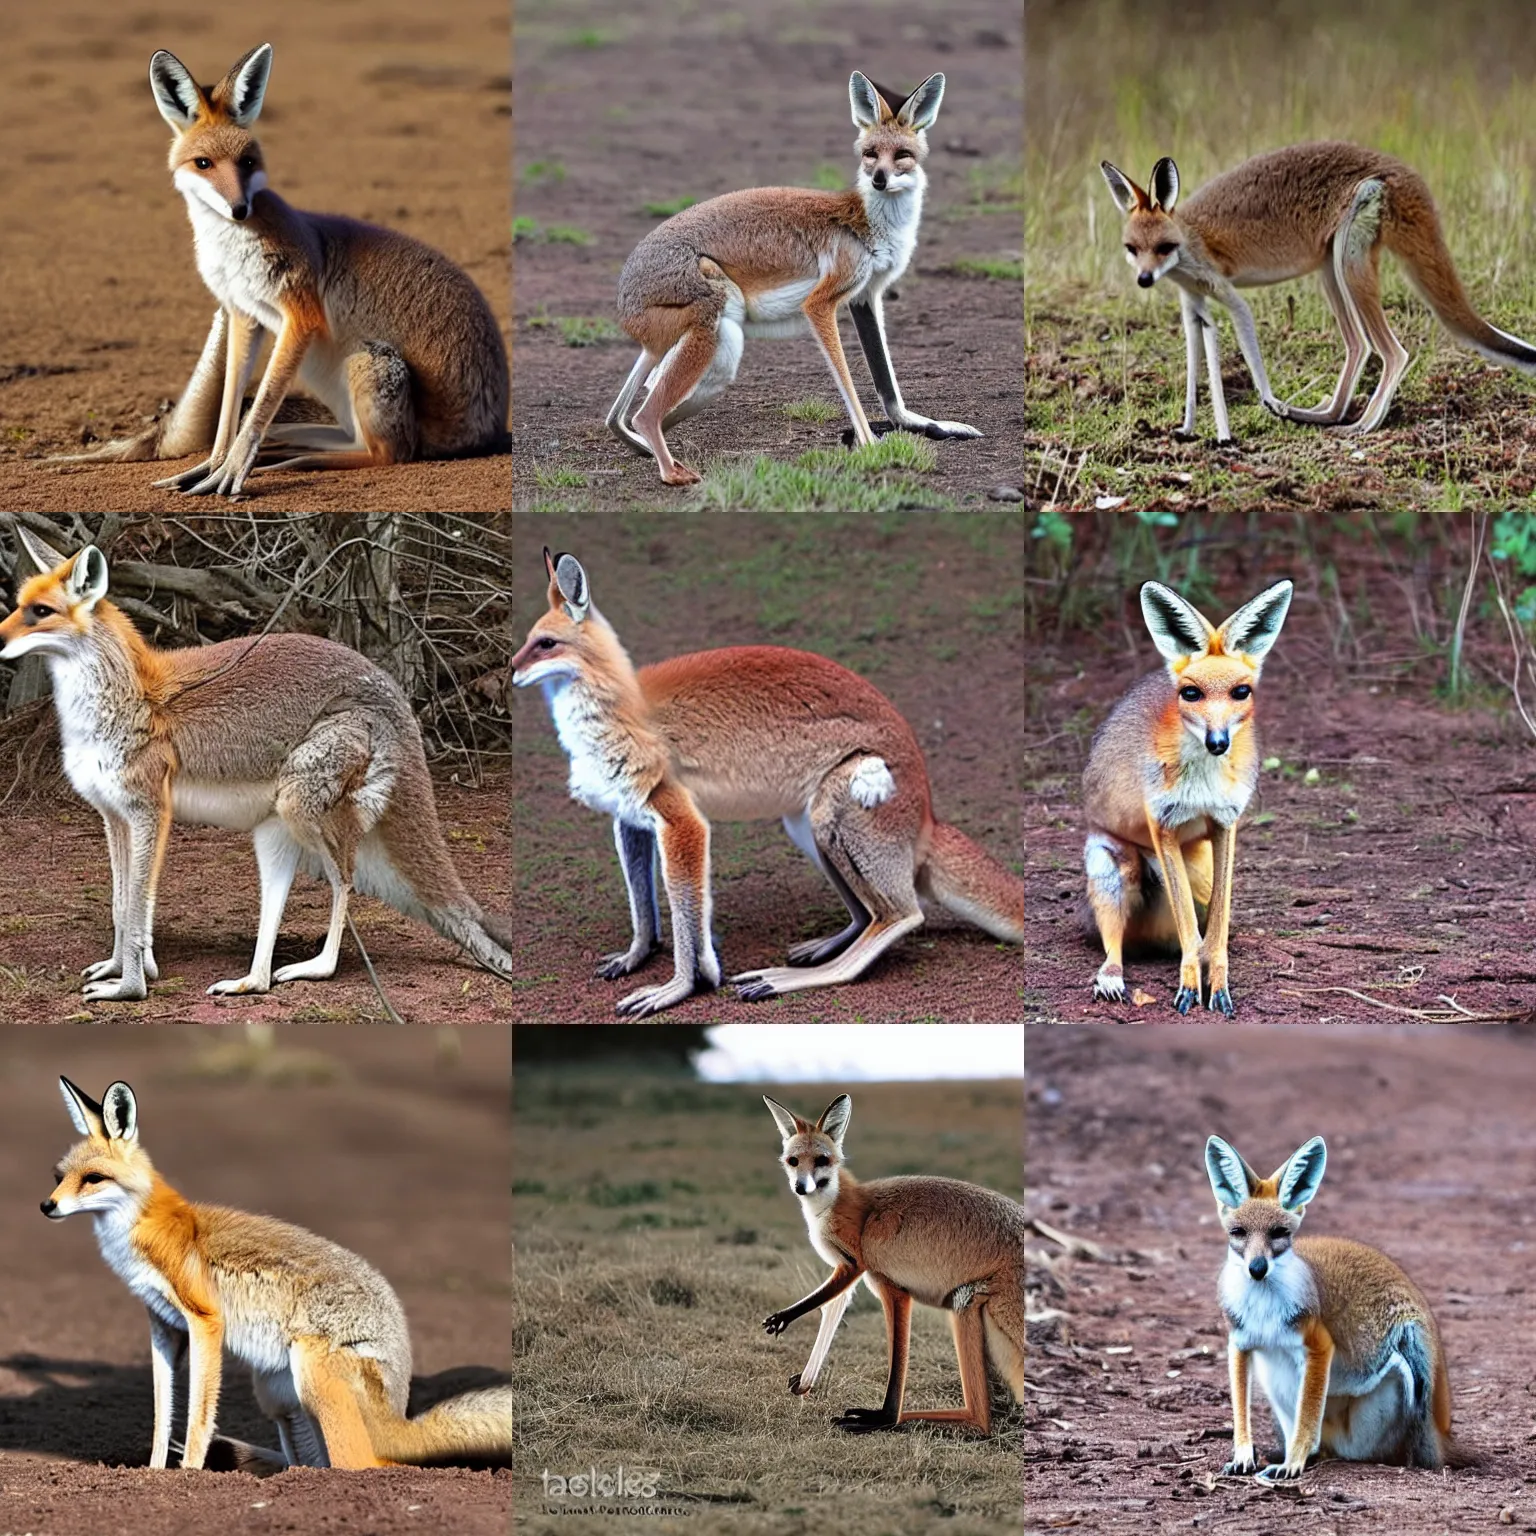 Prompt: Photograph of a kangaroo fox hybrid